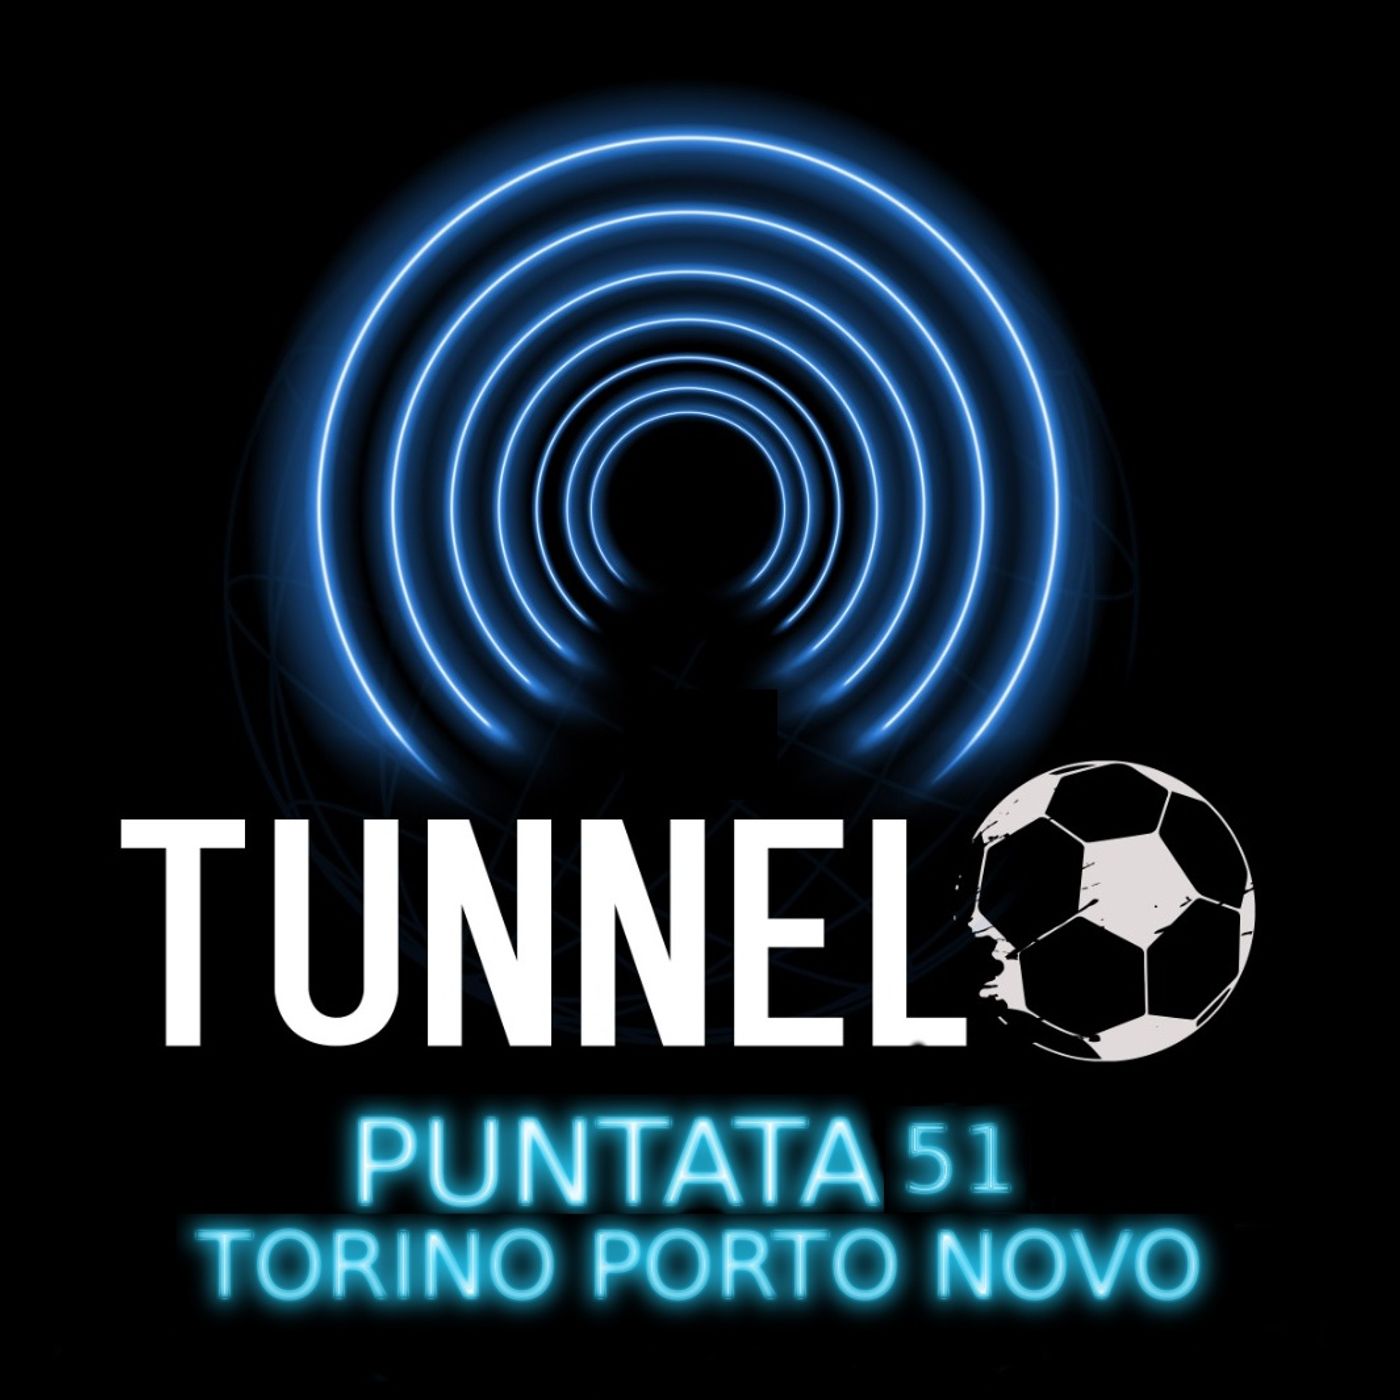 Puntata 51 - Torino Porto-Novo